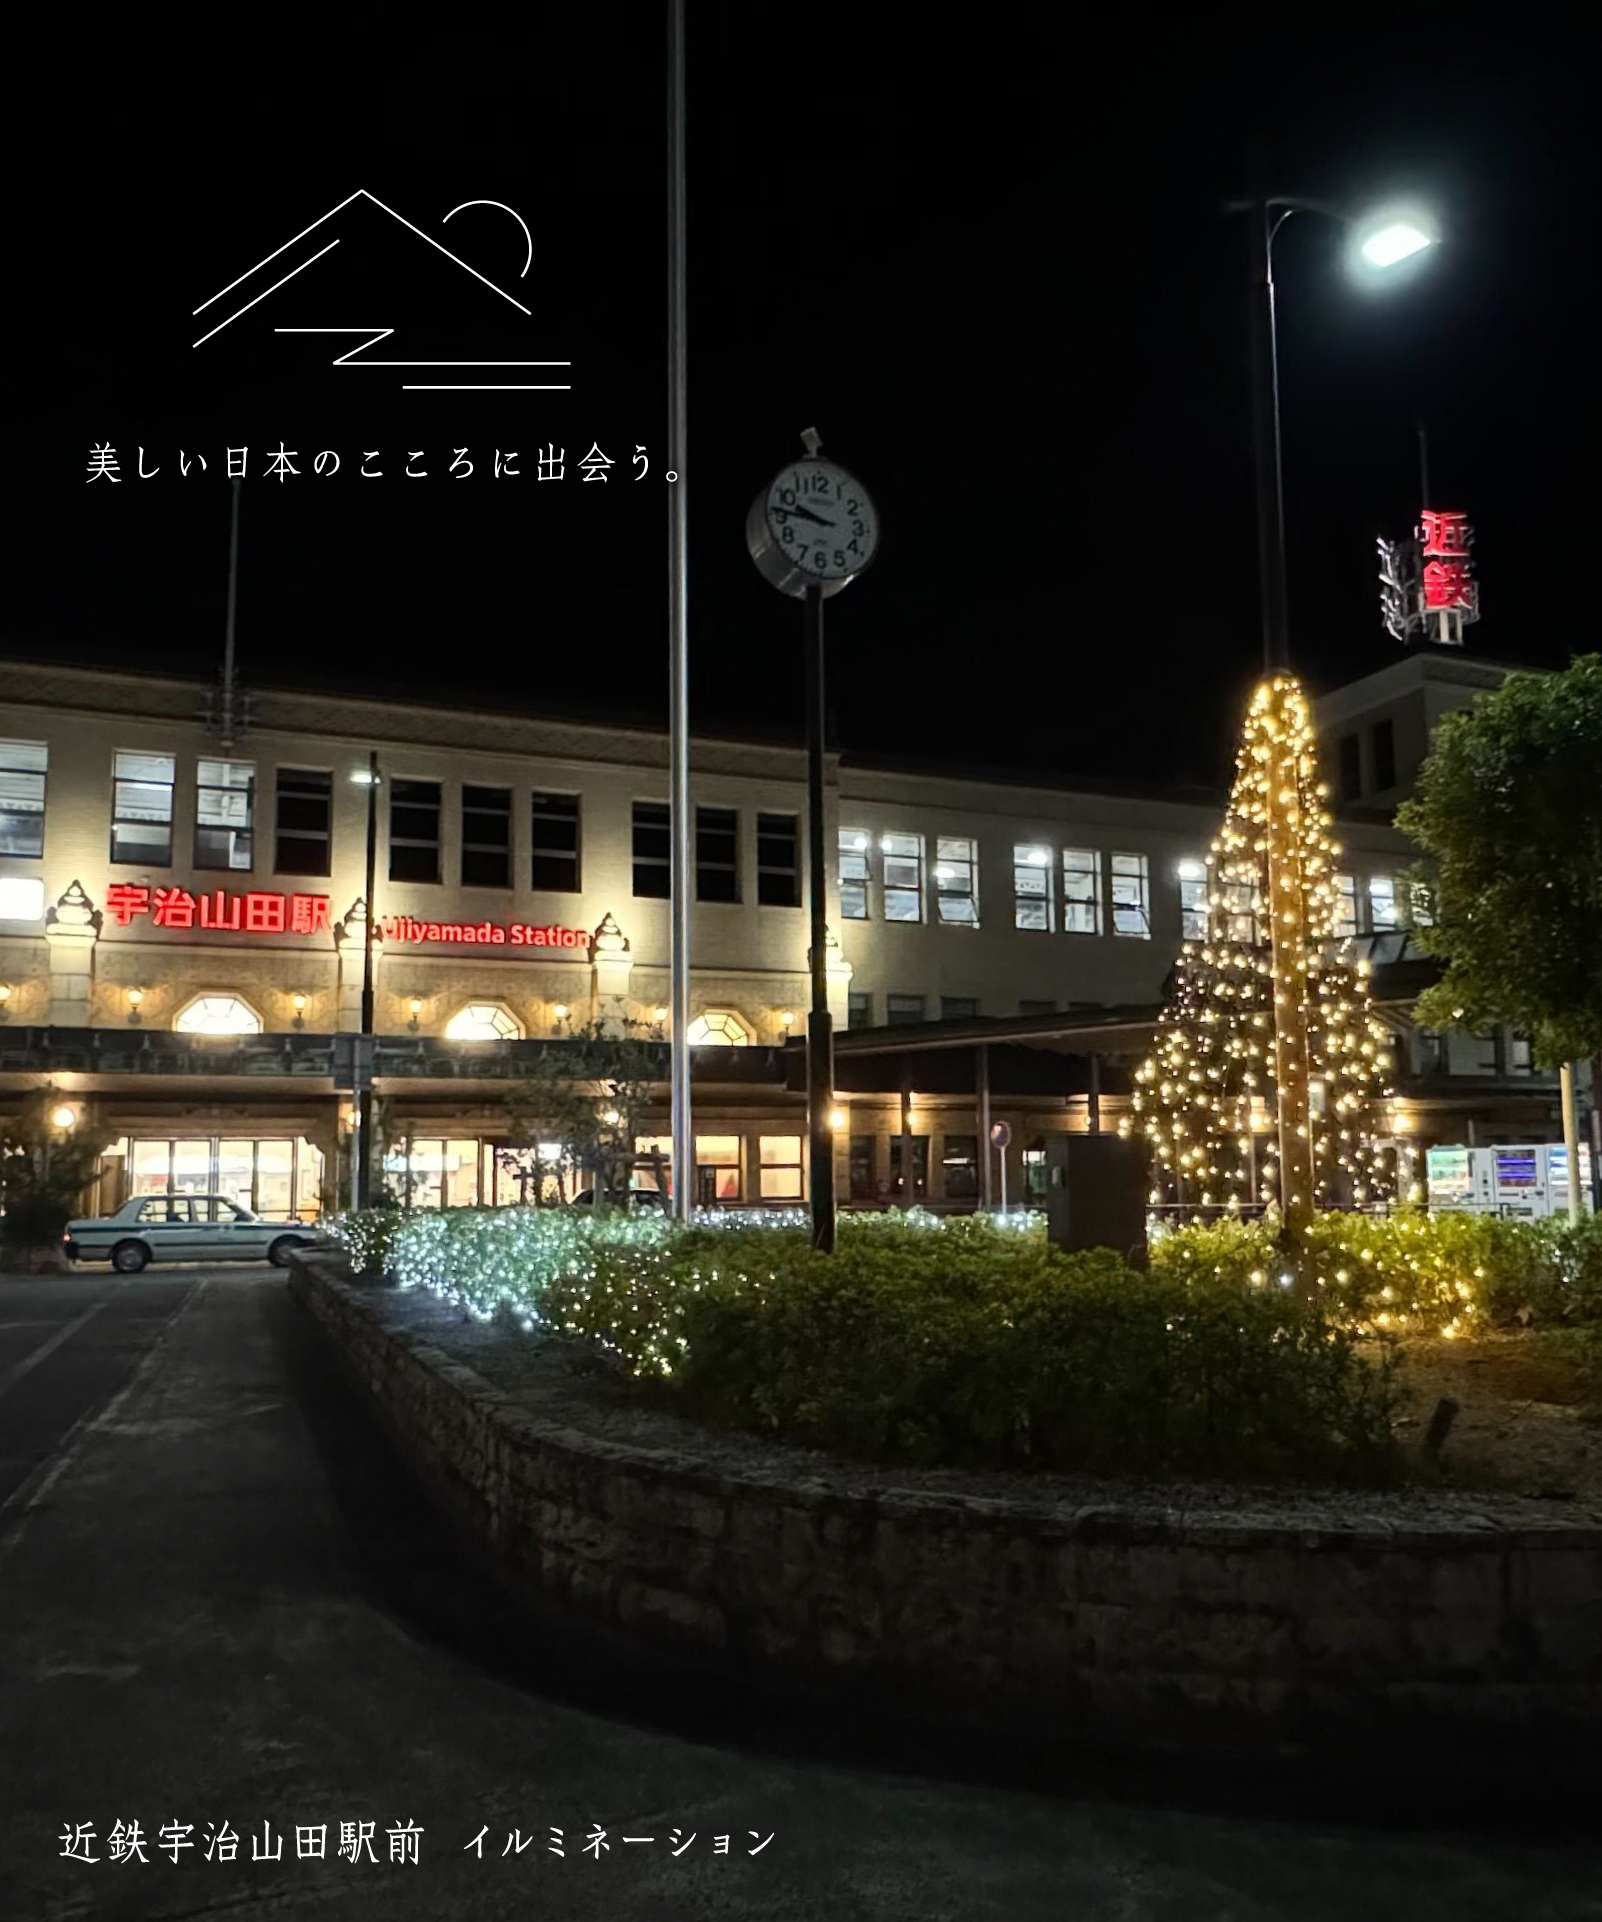 Illumination in front of Kintetsu Ujiyamada Station